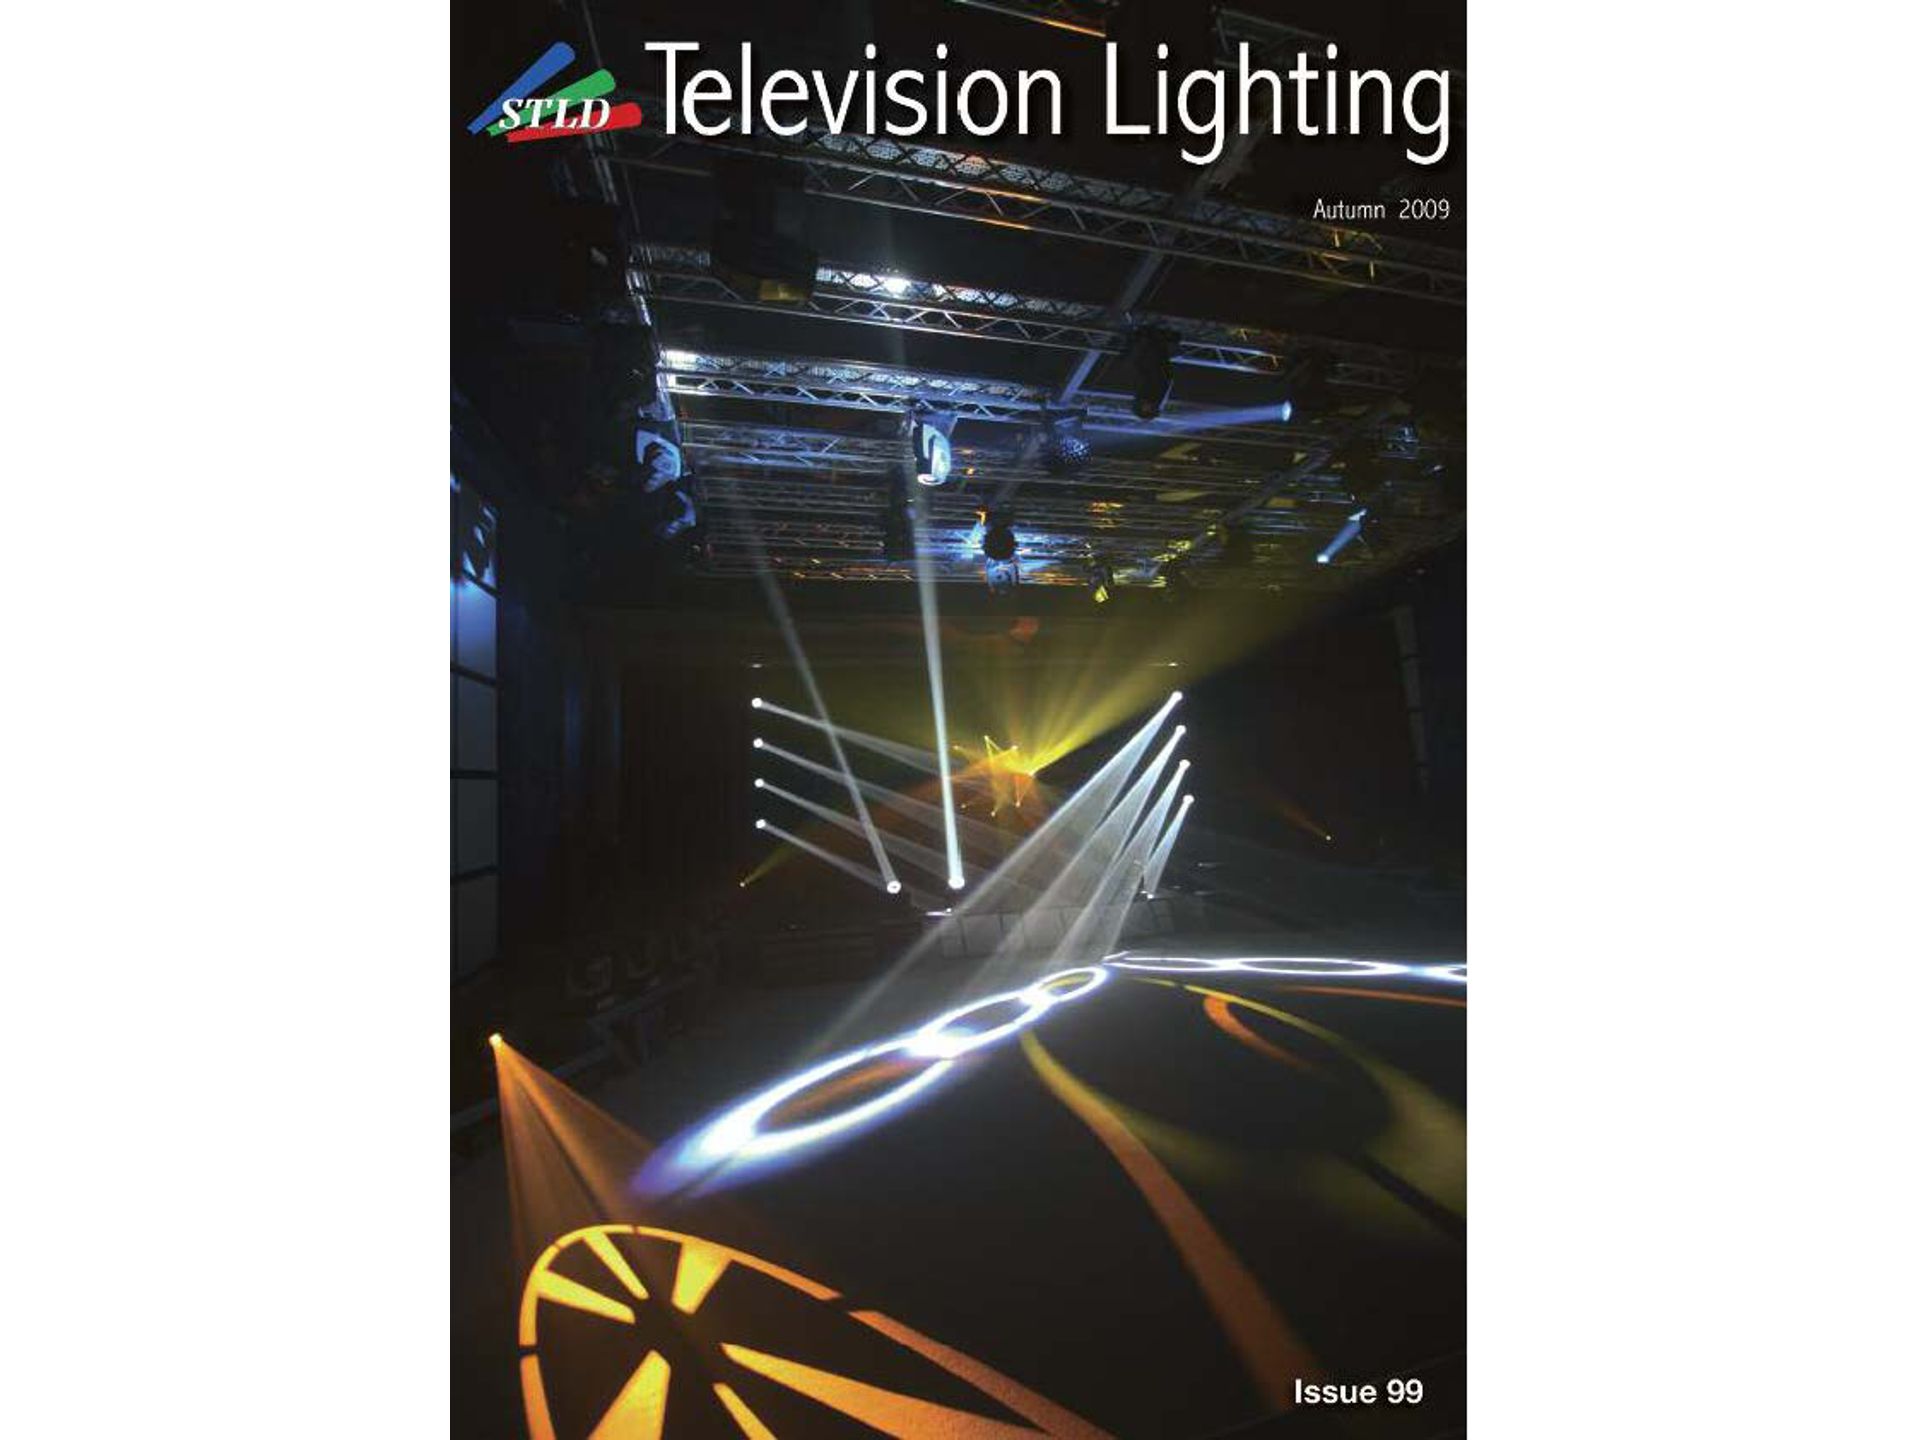 Television Lighting Magazine Cover